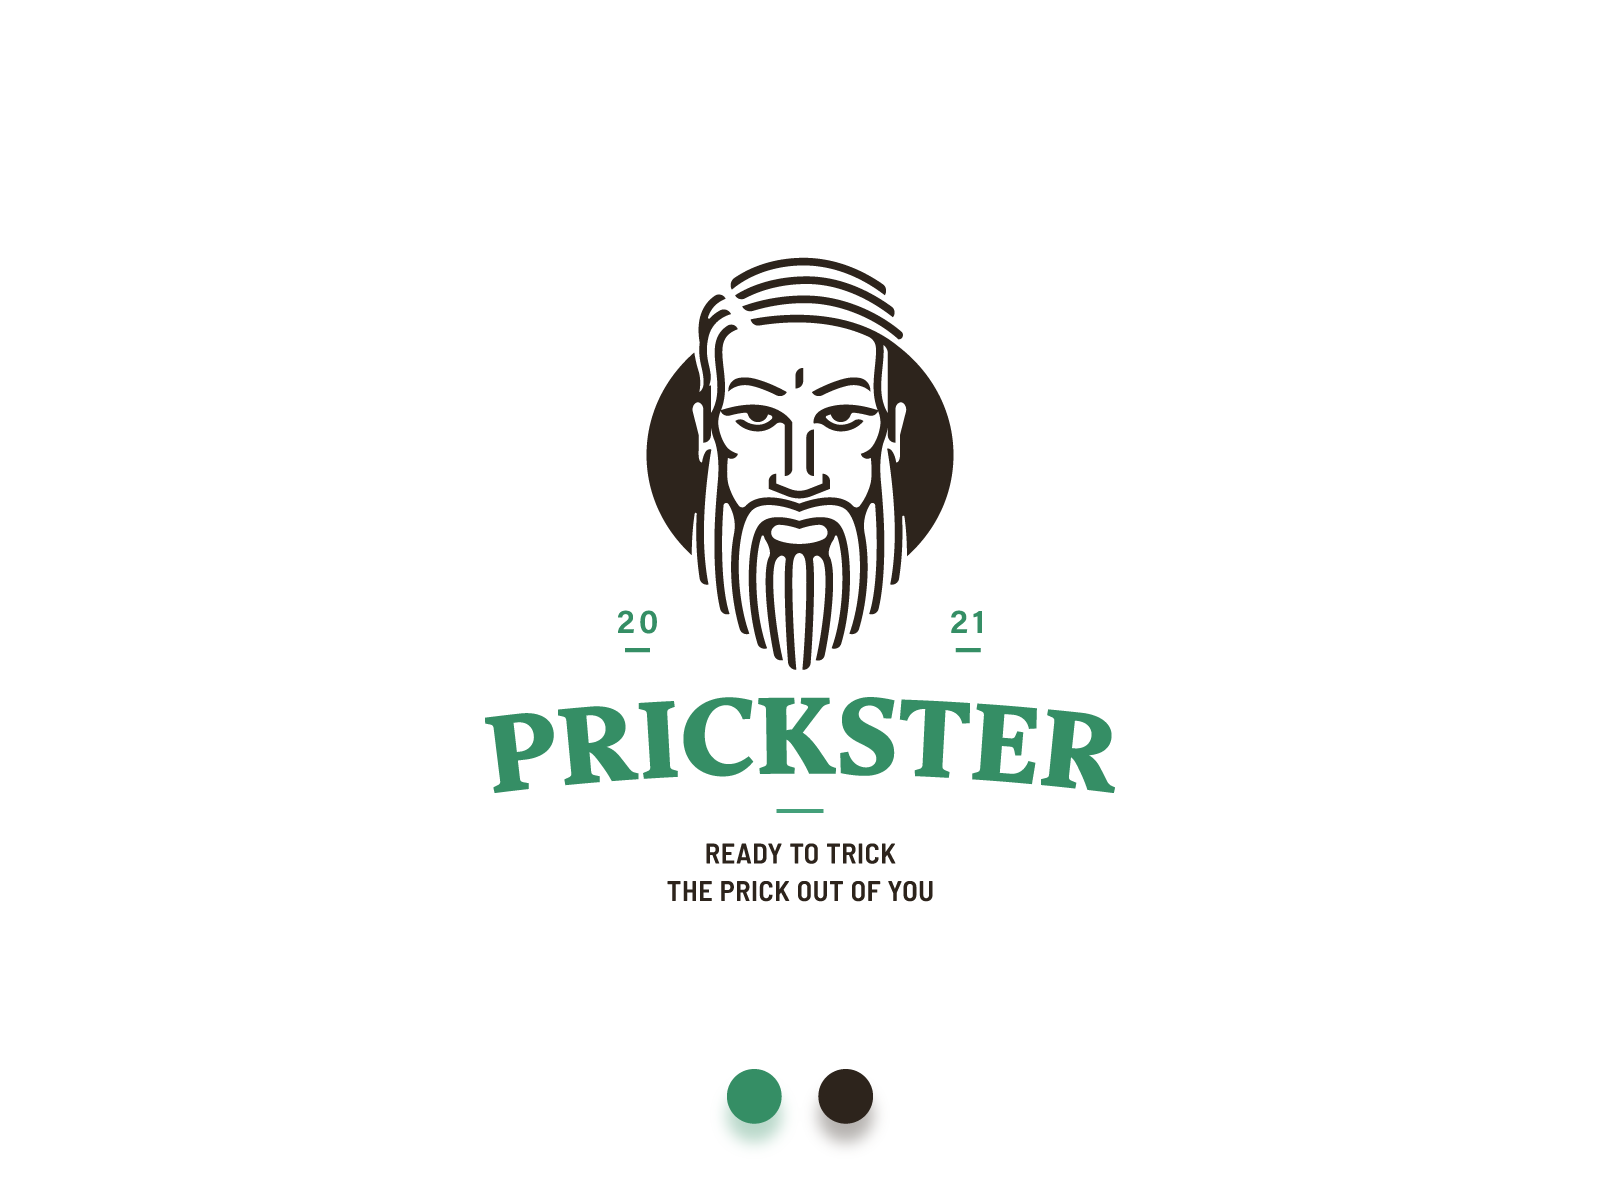 Prickster - practice logo by mrr - Mark Razvan Repa on Dribbble